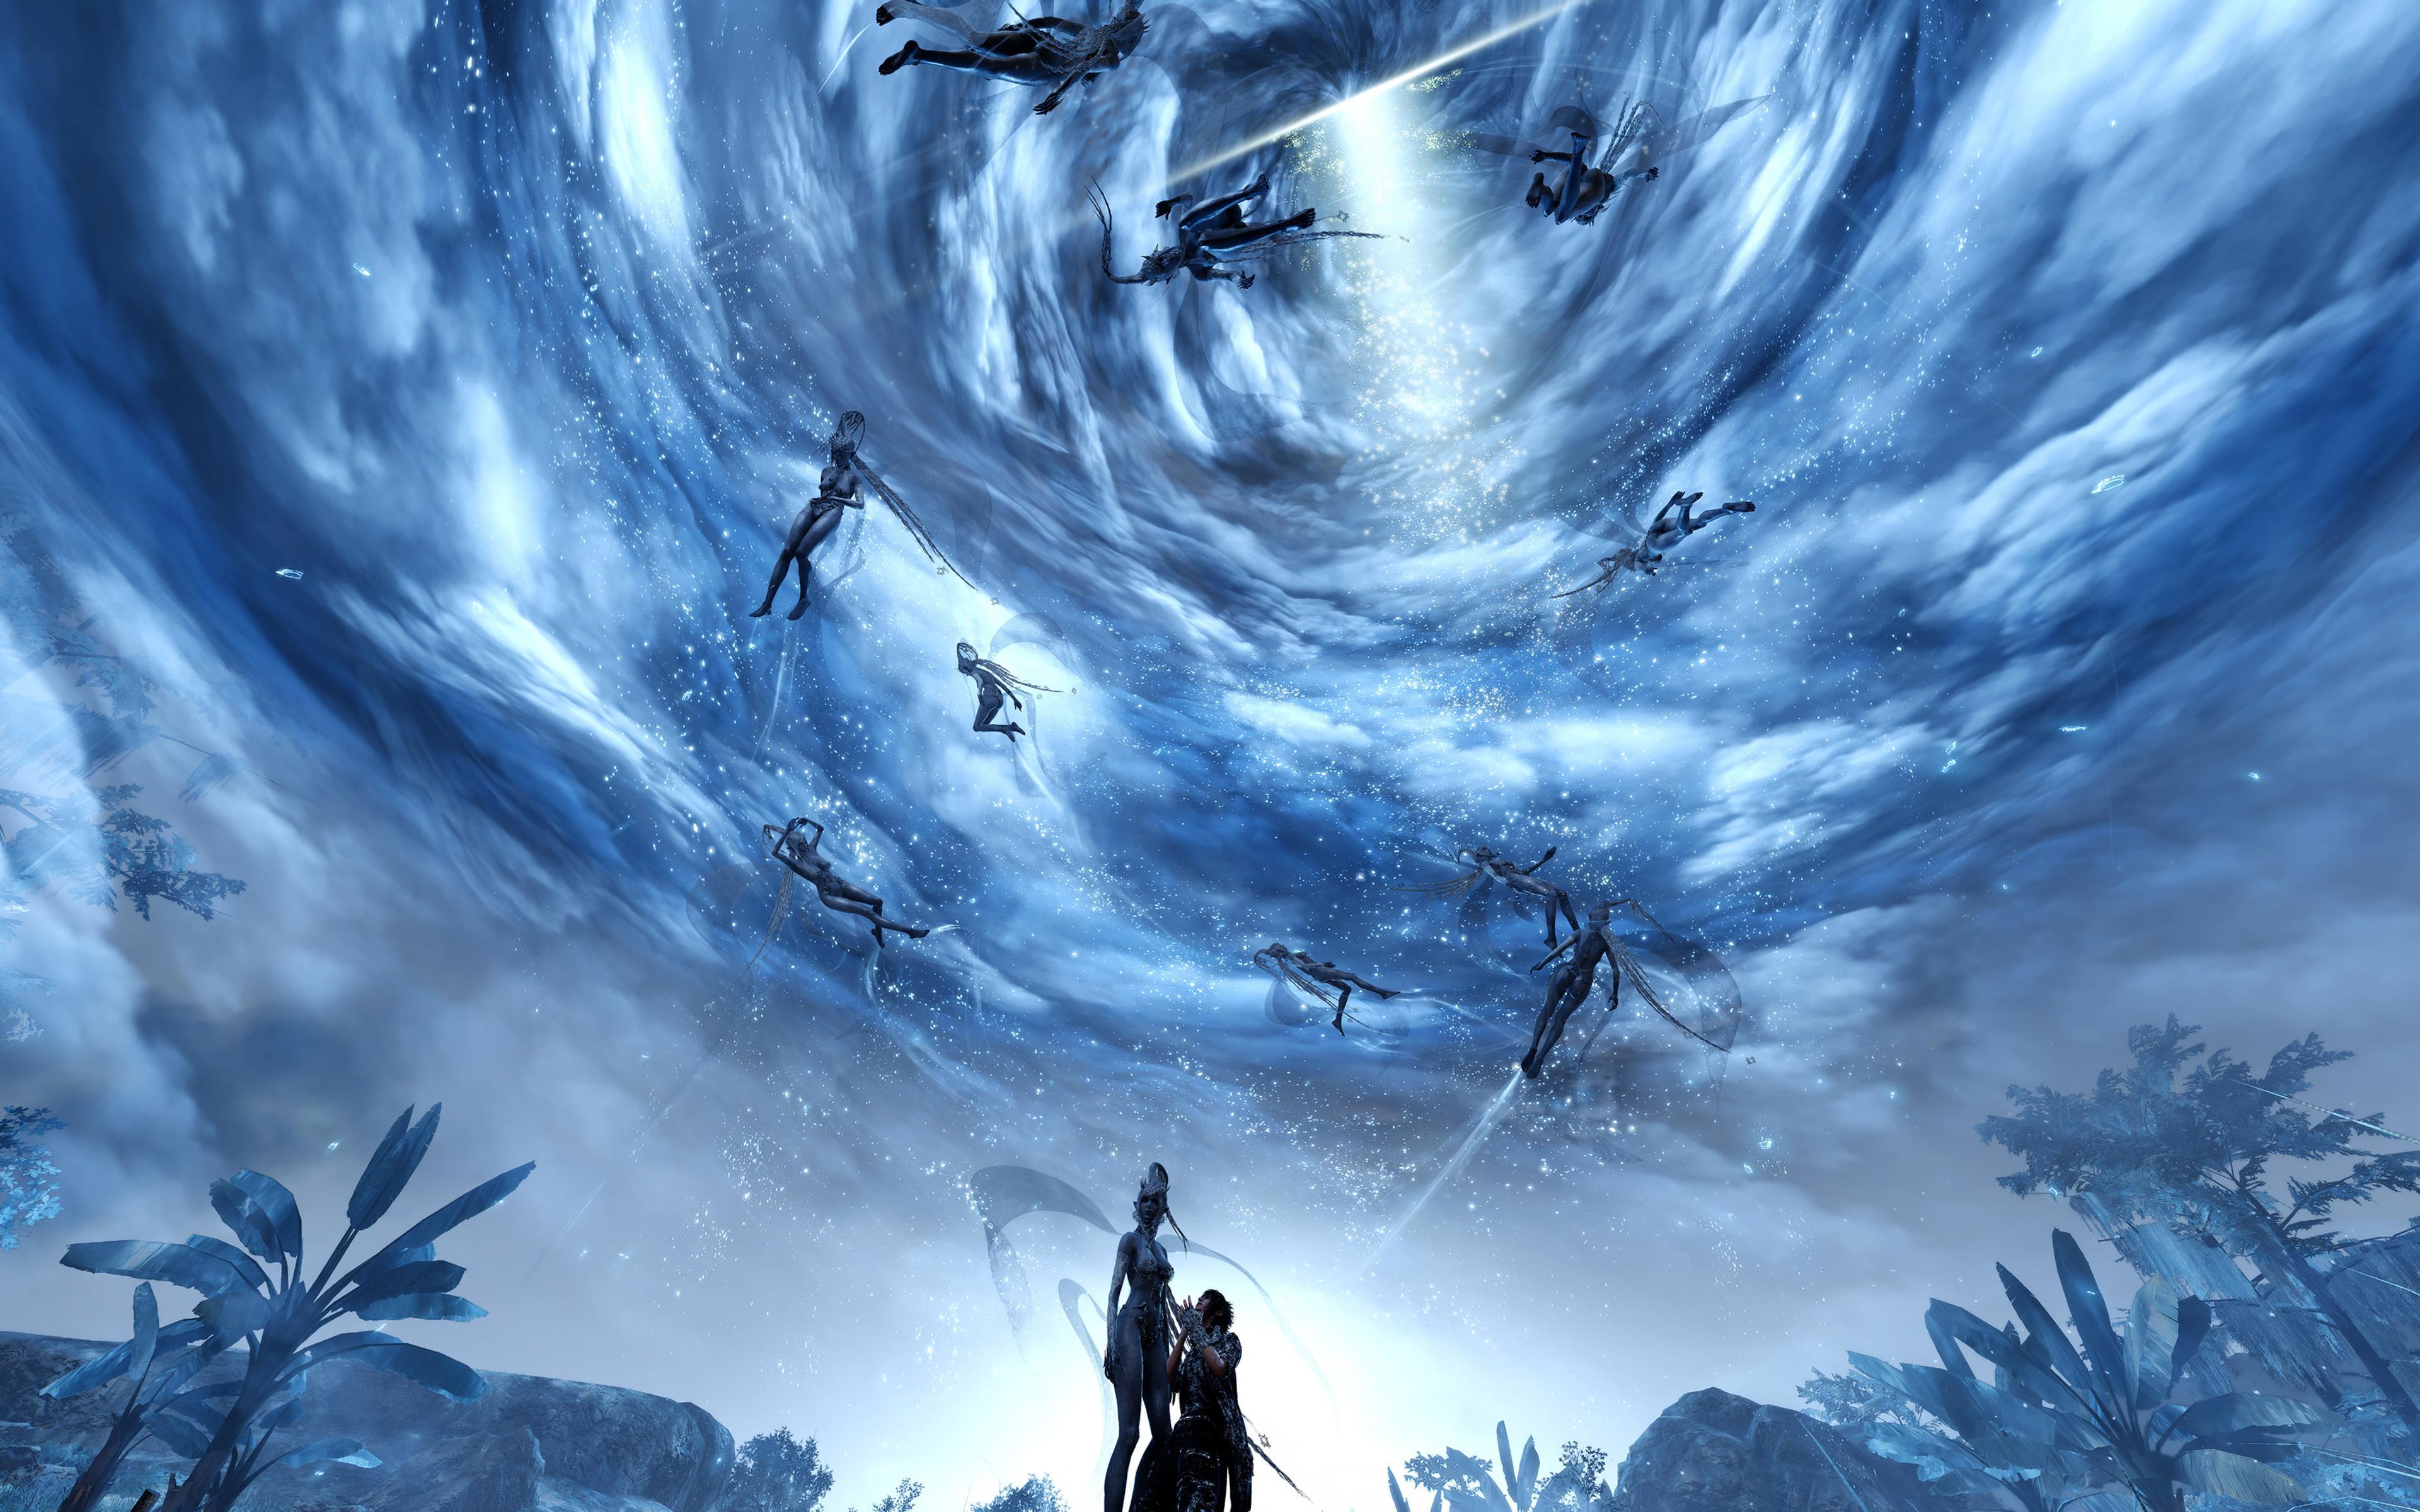 Download wallpaper Final Fantasy XV, 4k, 2018 games, poster, RPG